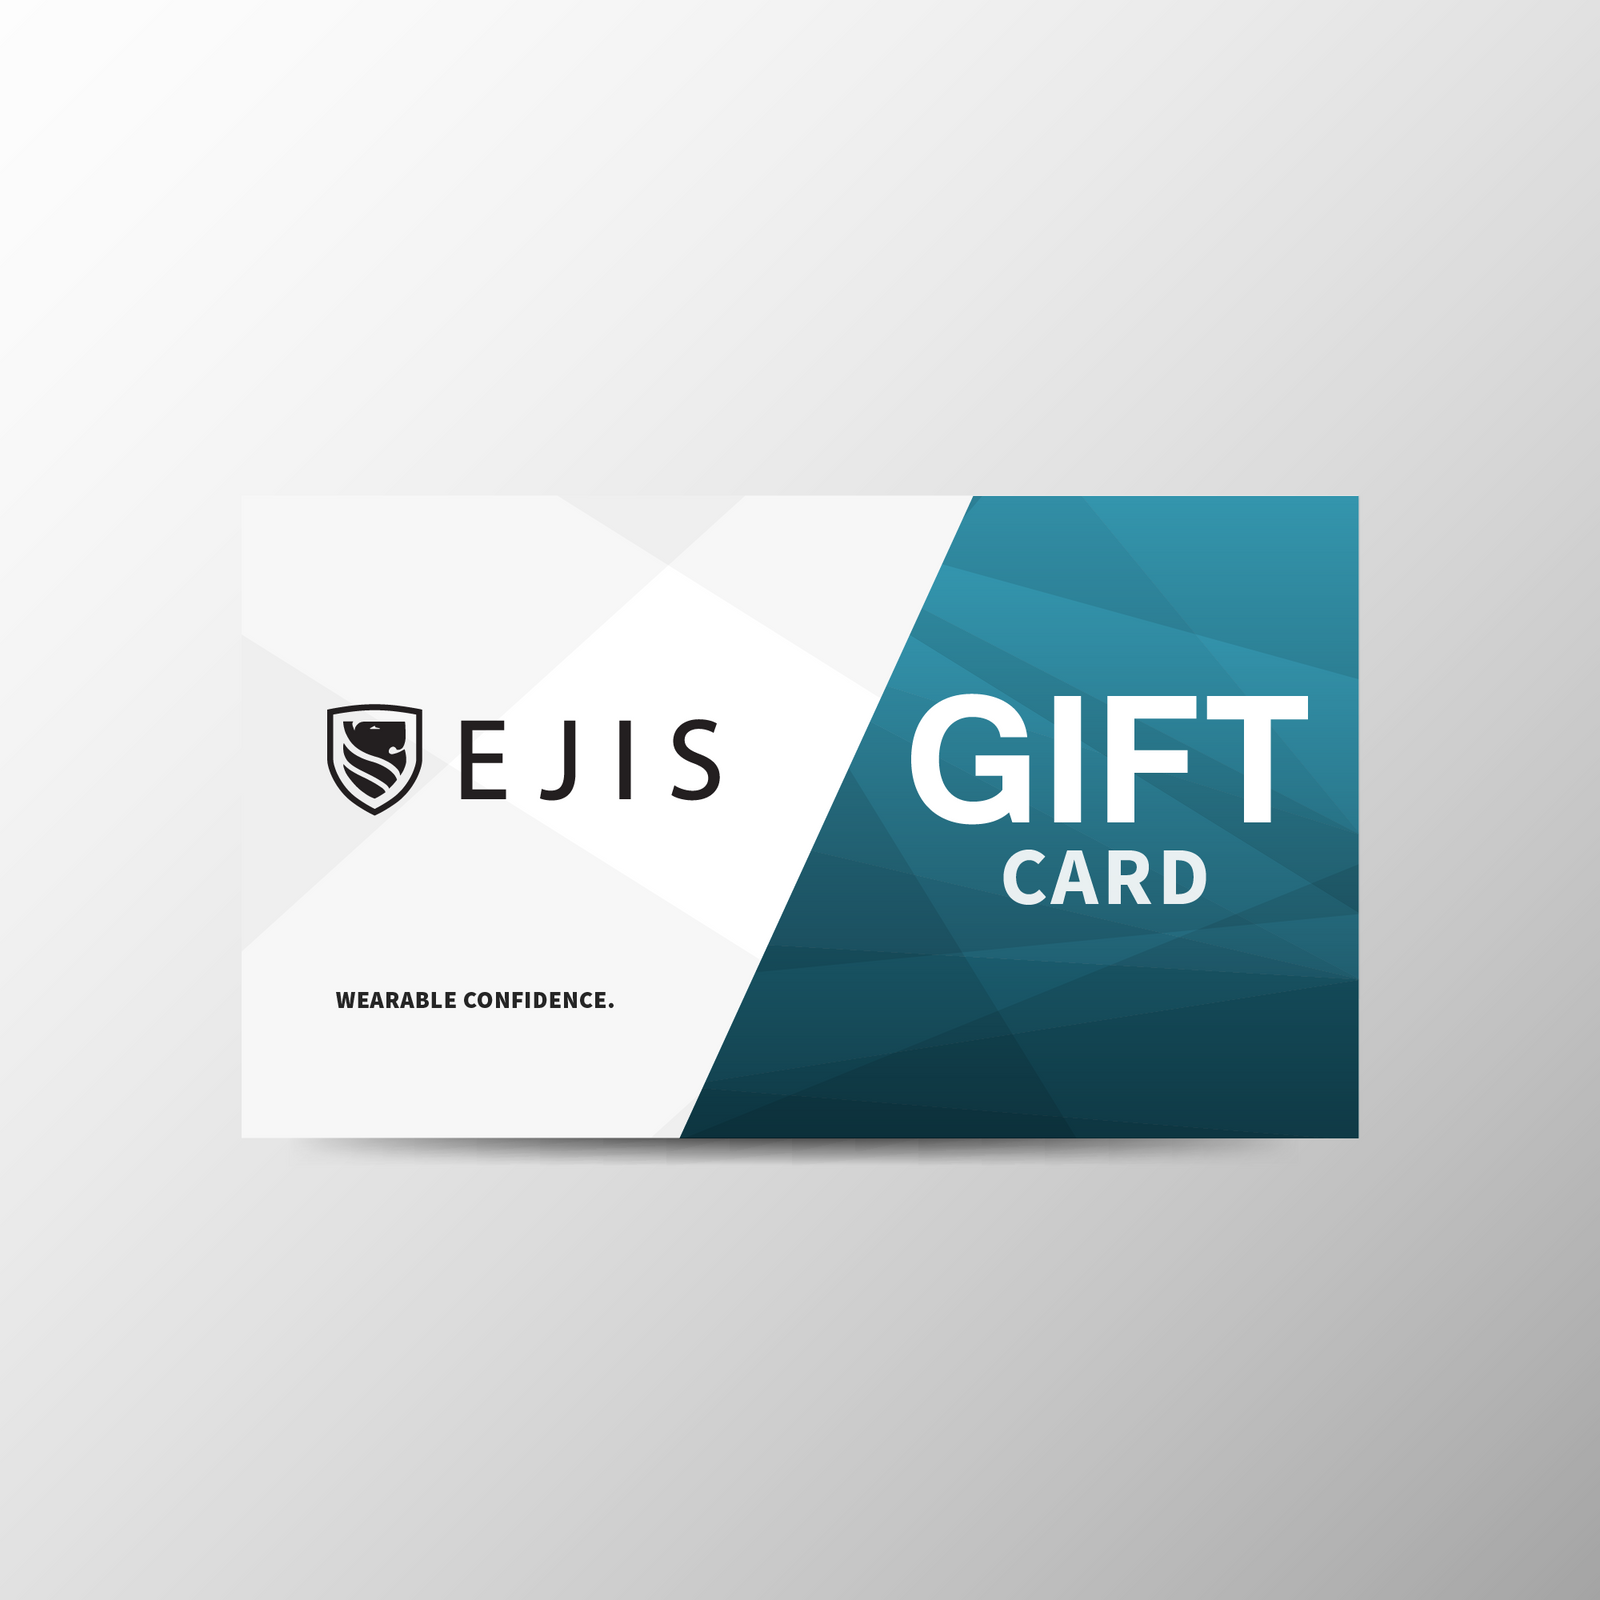 Gift Card - Ejis, inc.